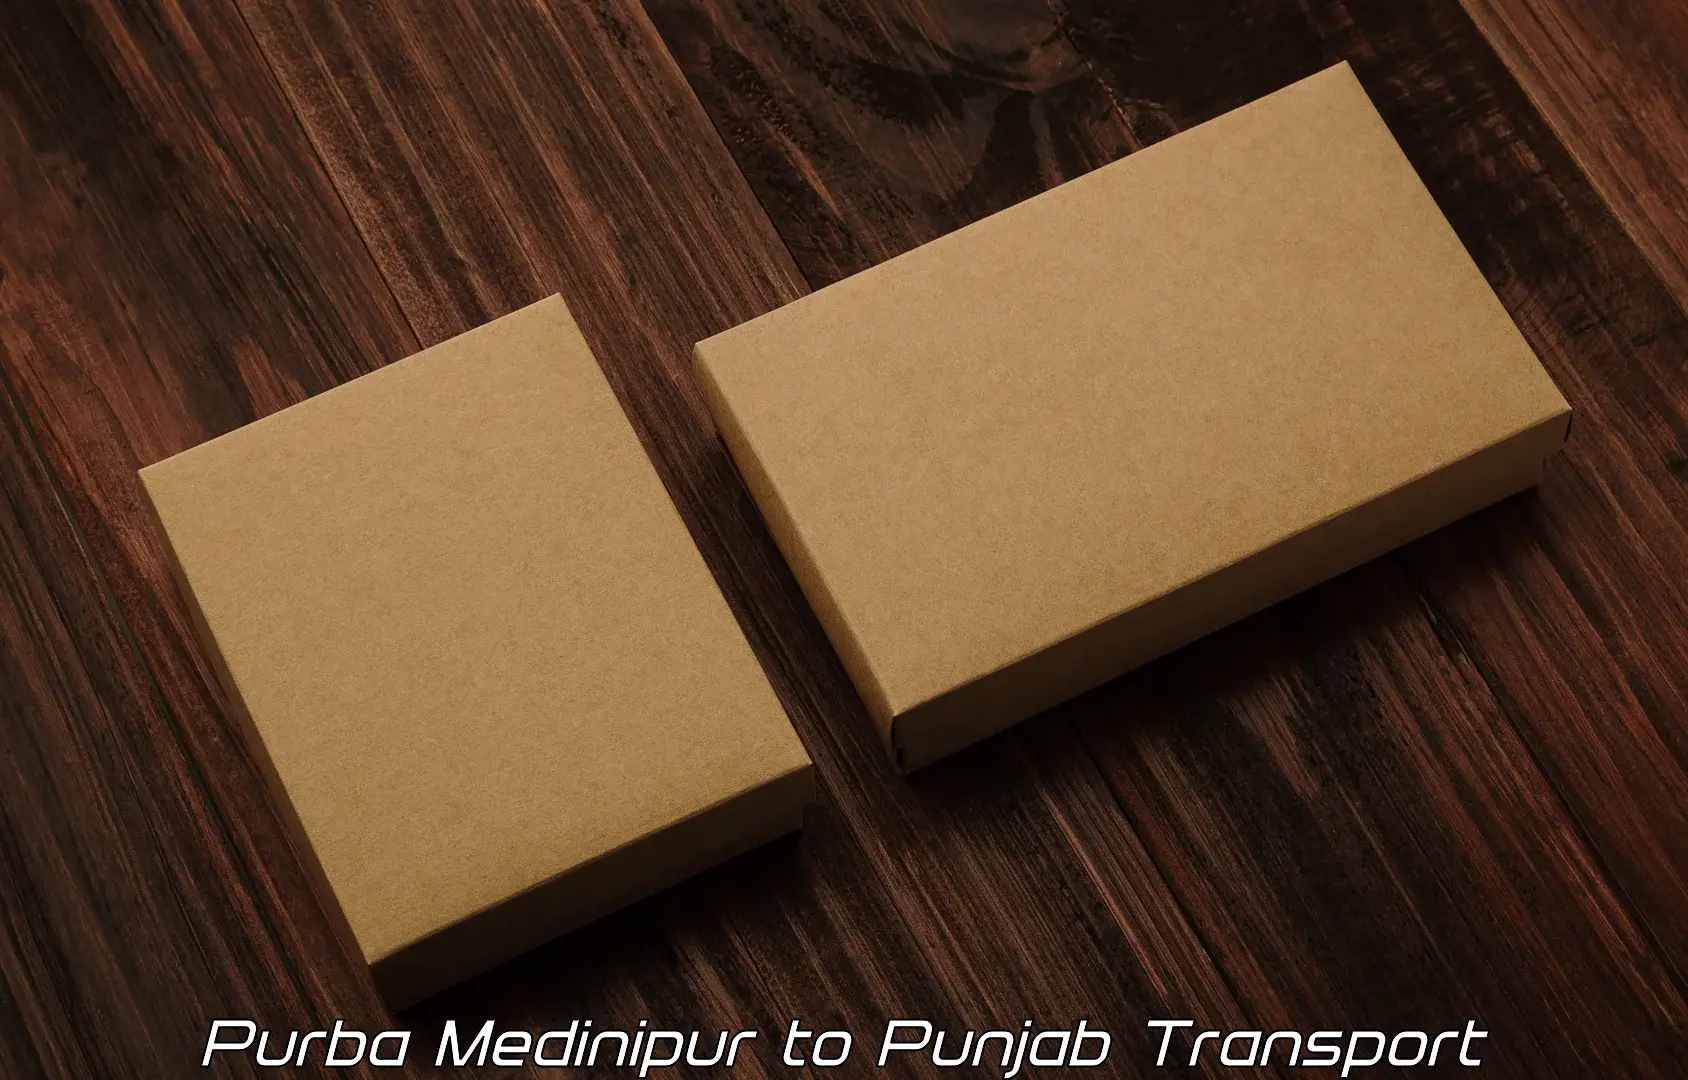 Sending bike to another city Purba Medinipur to Talwara